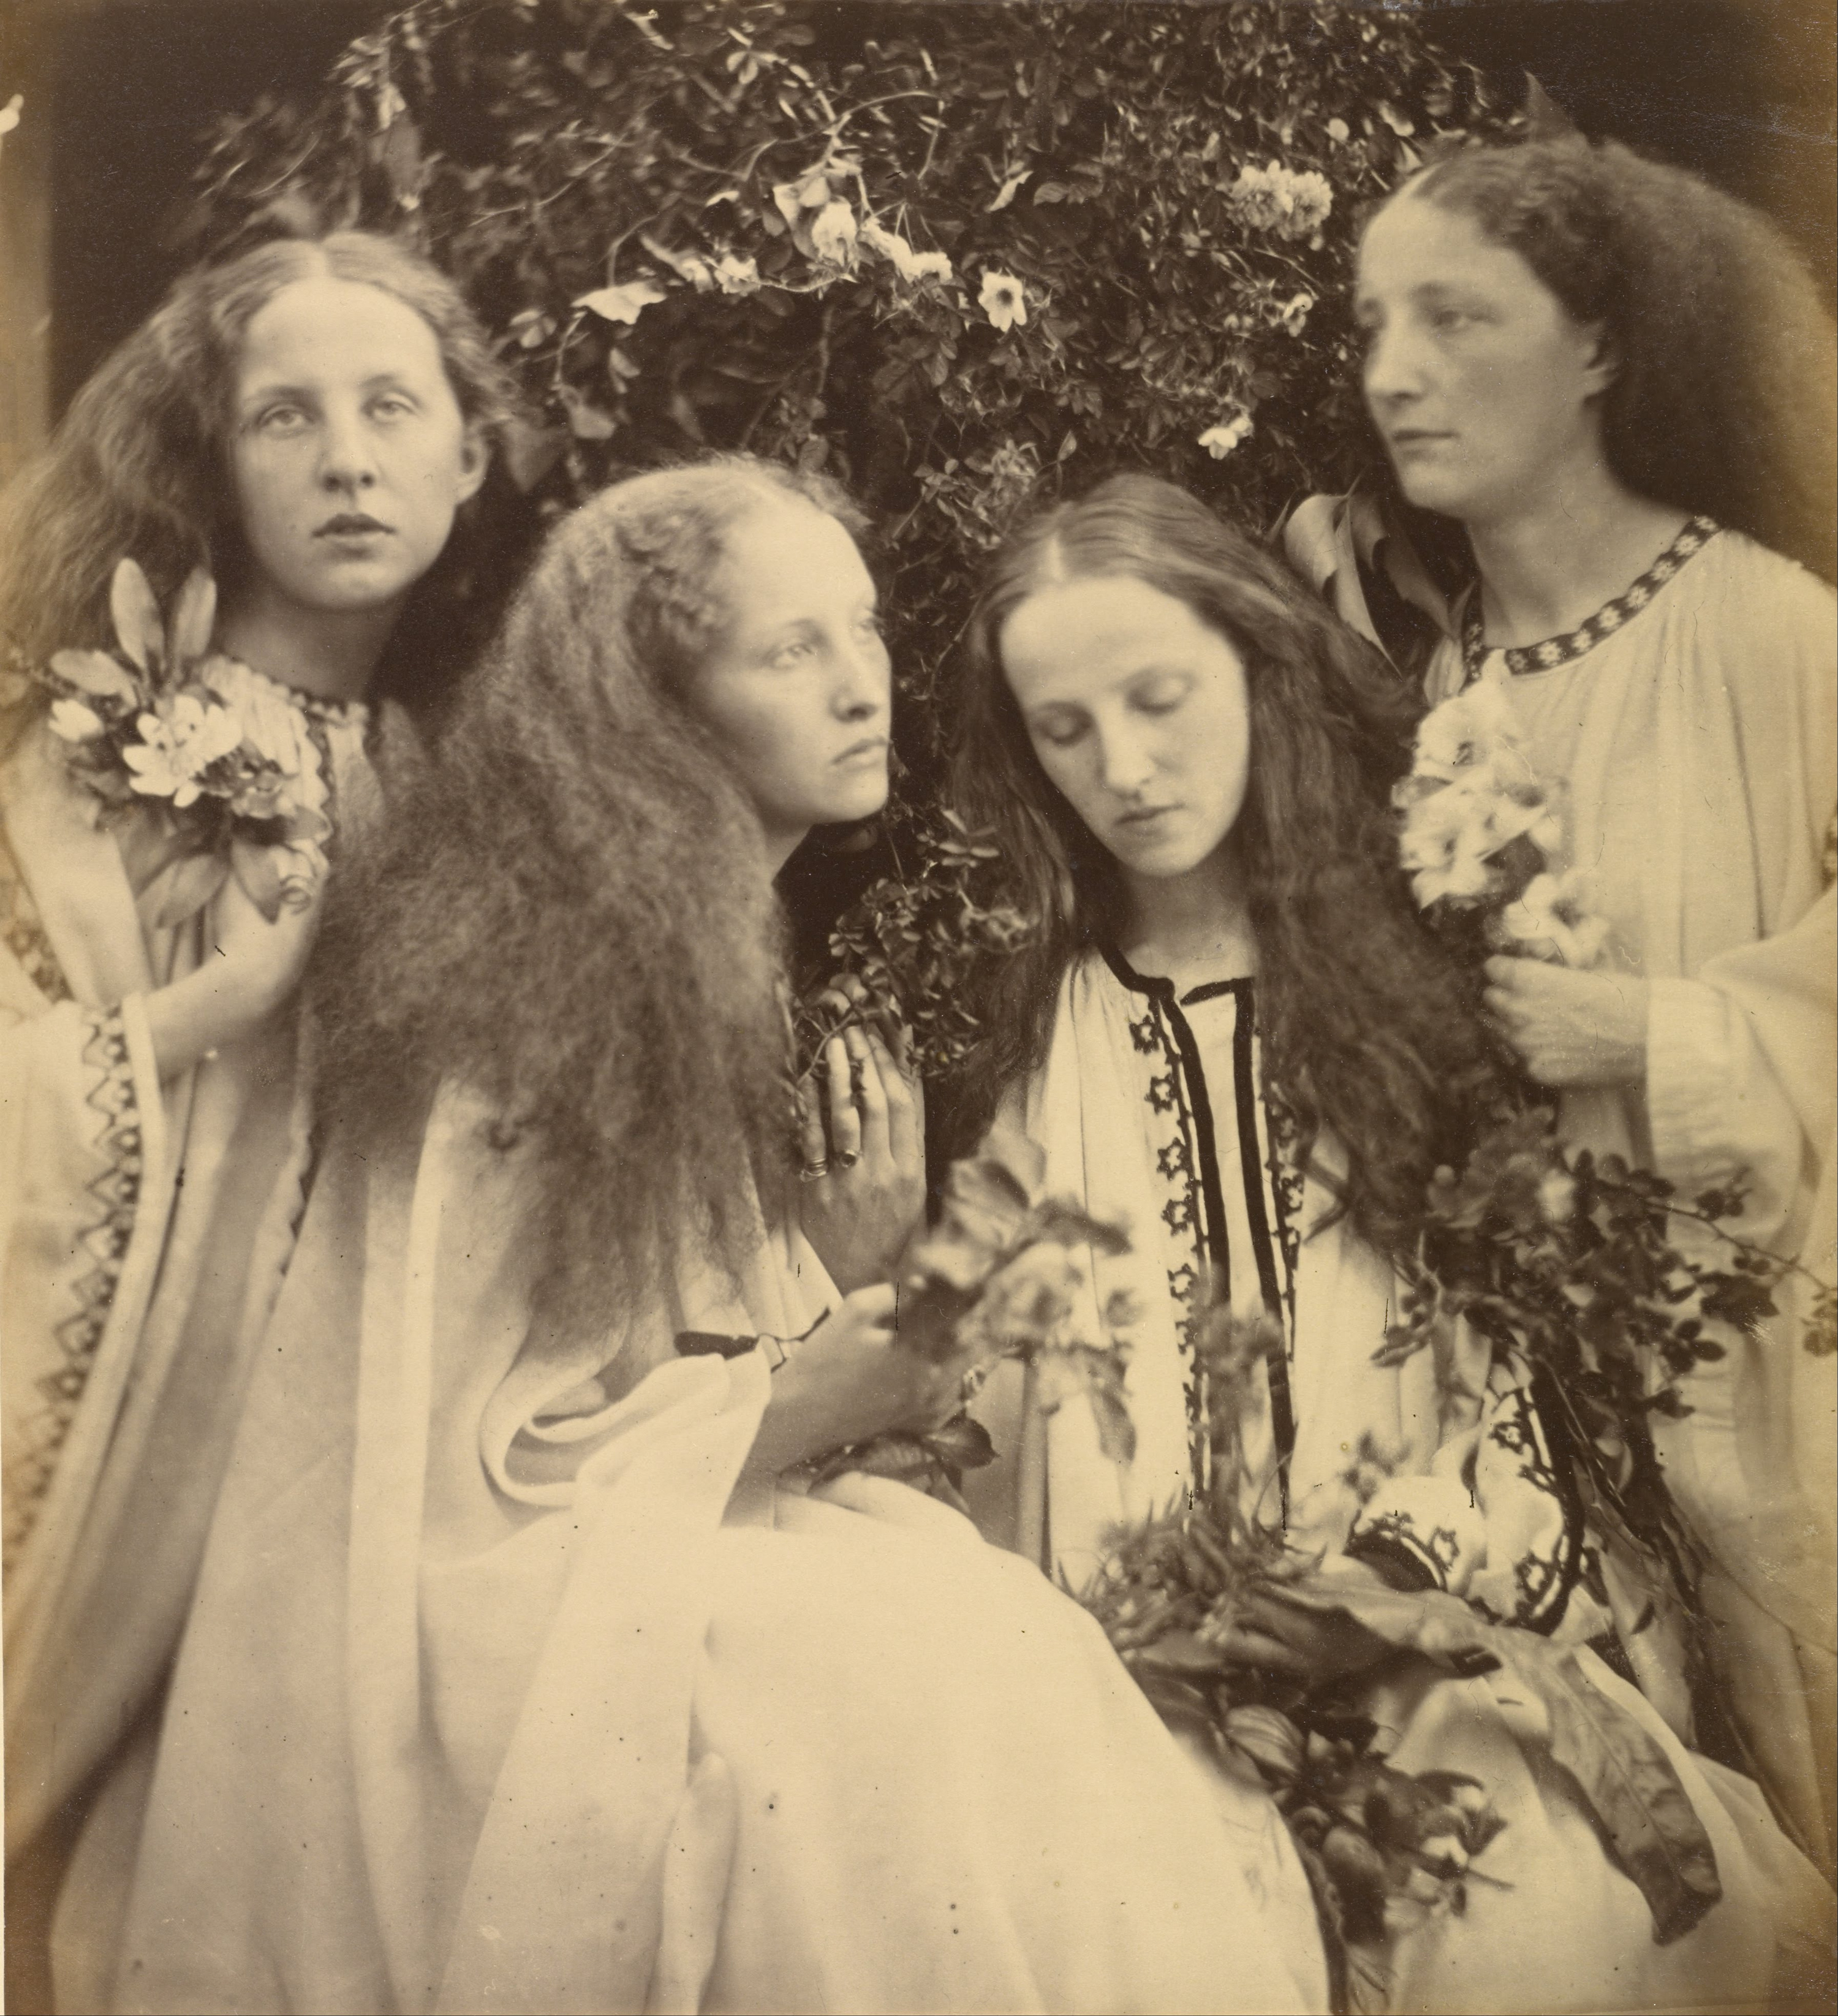 The Rosebud Garden of Girls by Julia Margaret Cameron - June 1868 - 26.7 x 29.4 cm J. Paul Getty Museum